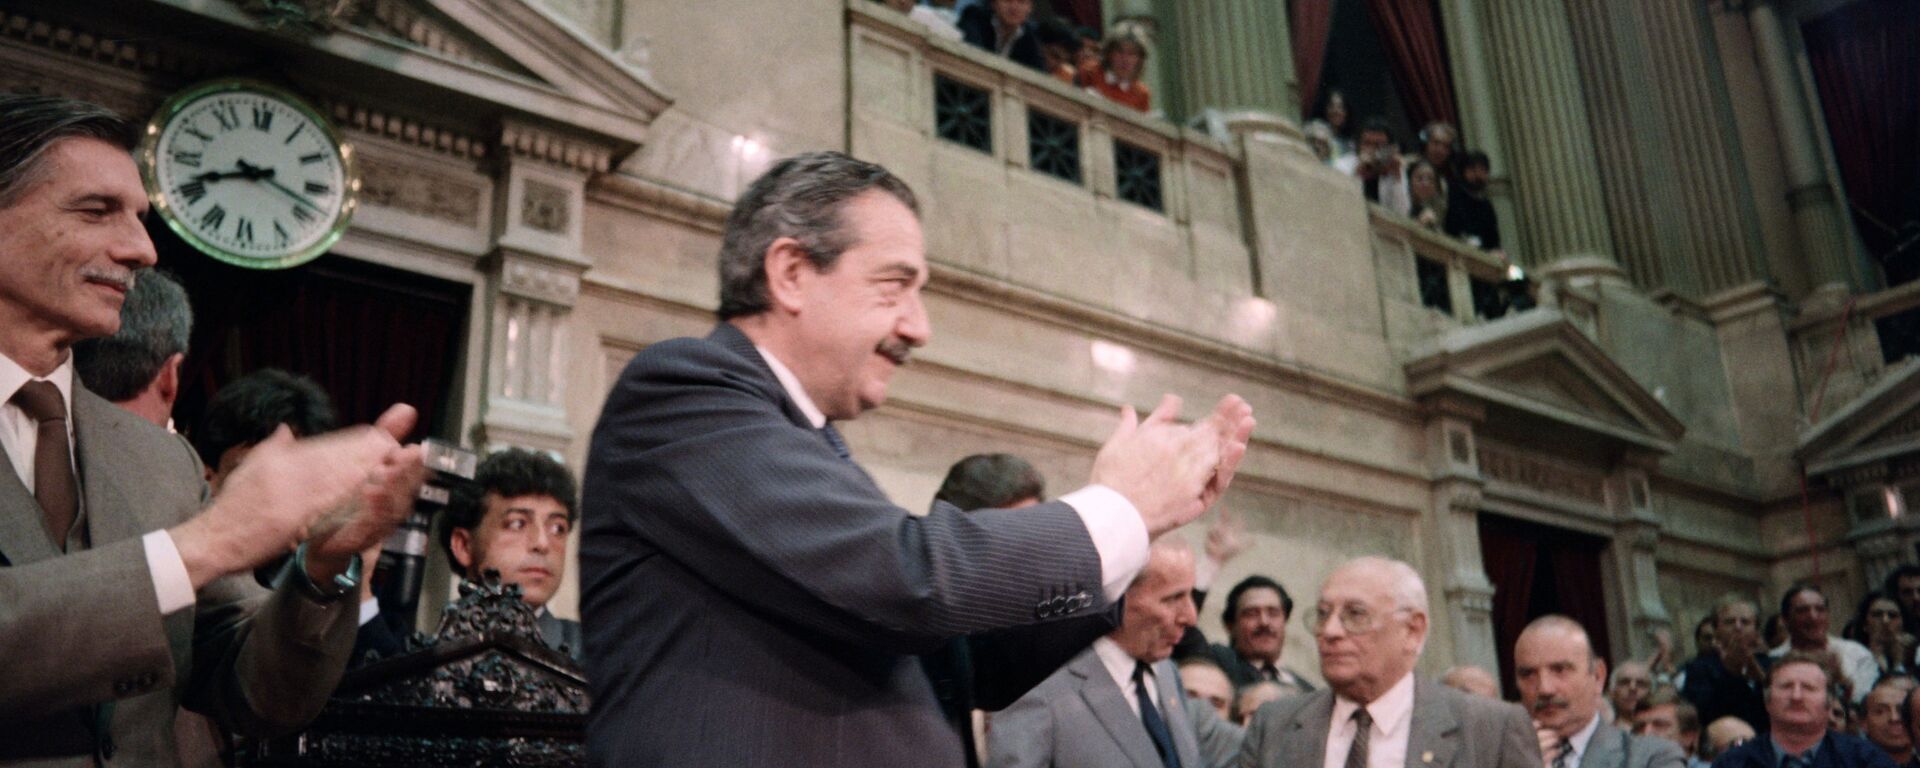 El expresidente de Argentina, Raúl Alfonsín - Sputnik Mundo, 1920, 27.05.2019